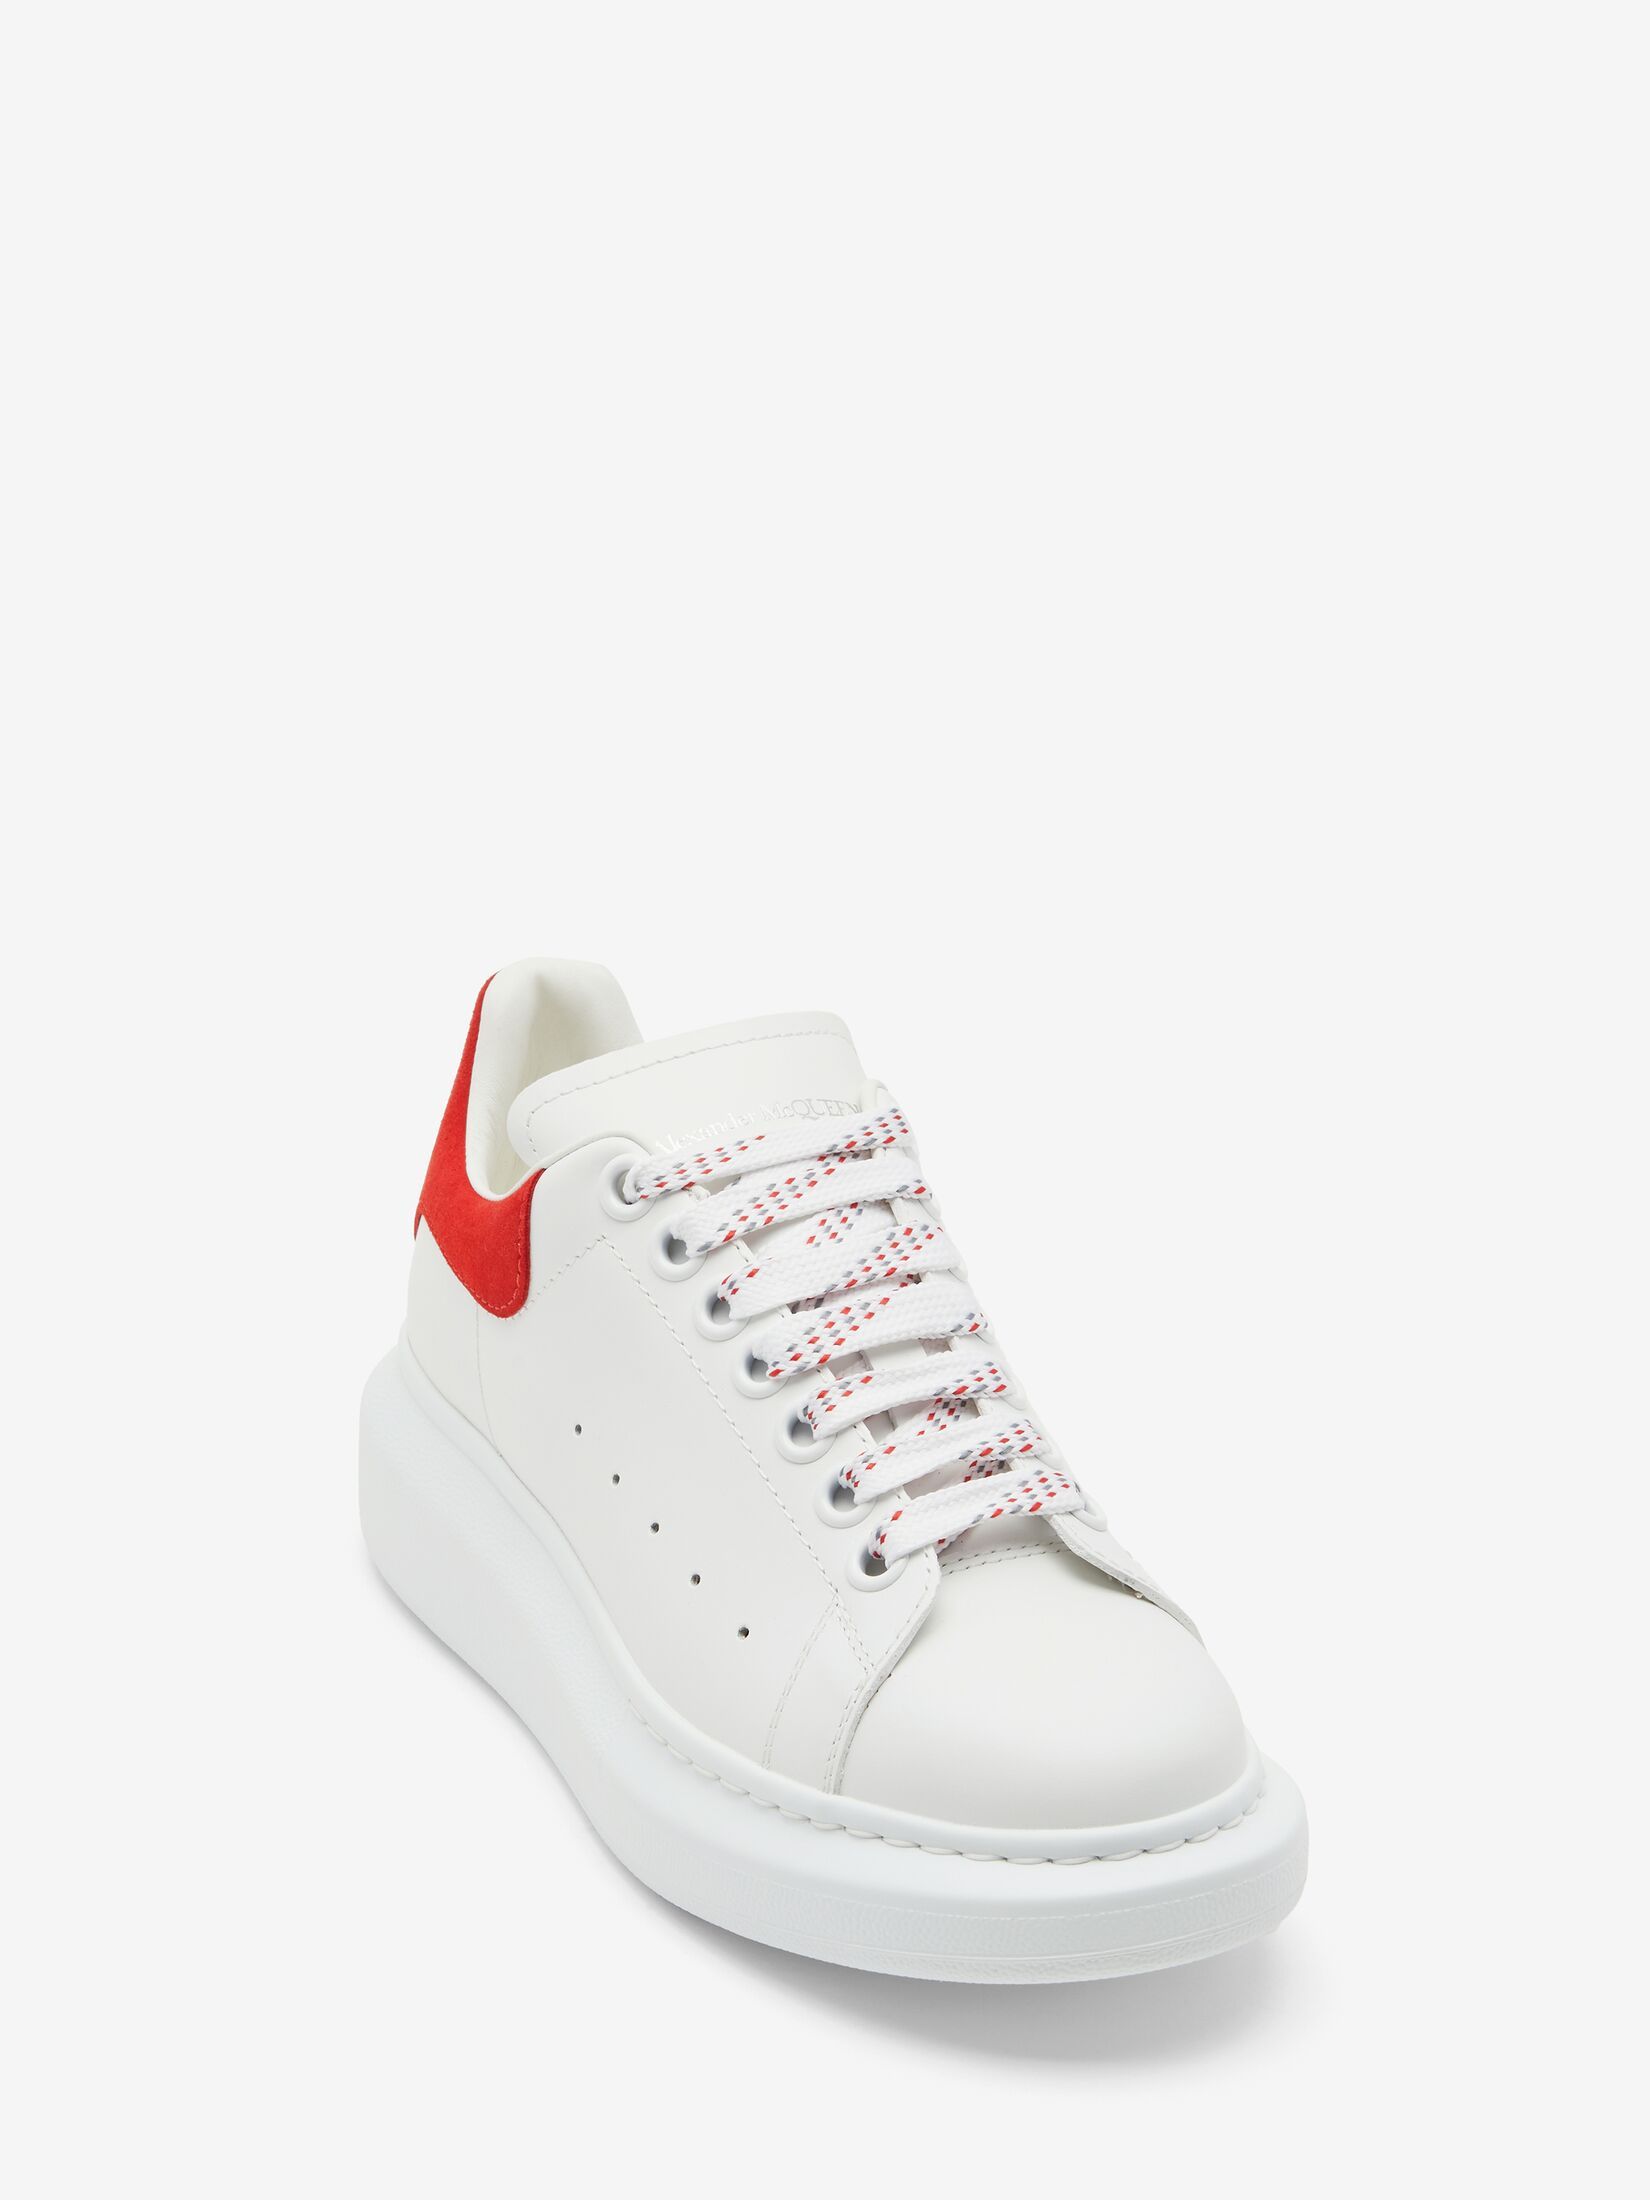 Women's Oversized Sneaker in White/lust Red | Alexander McQueen